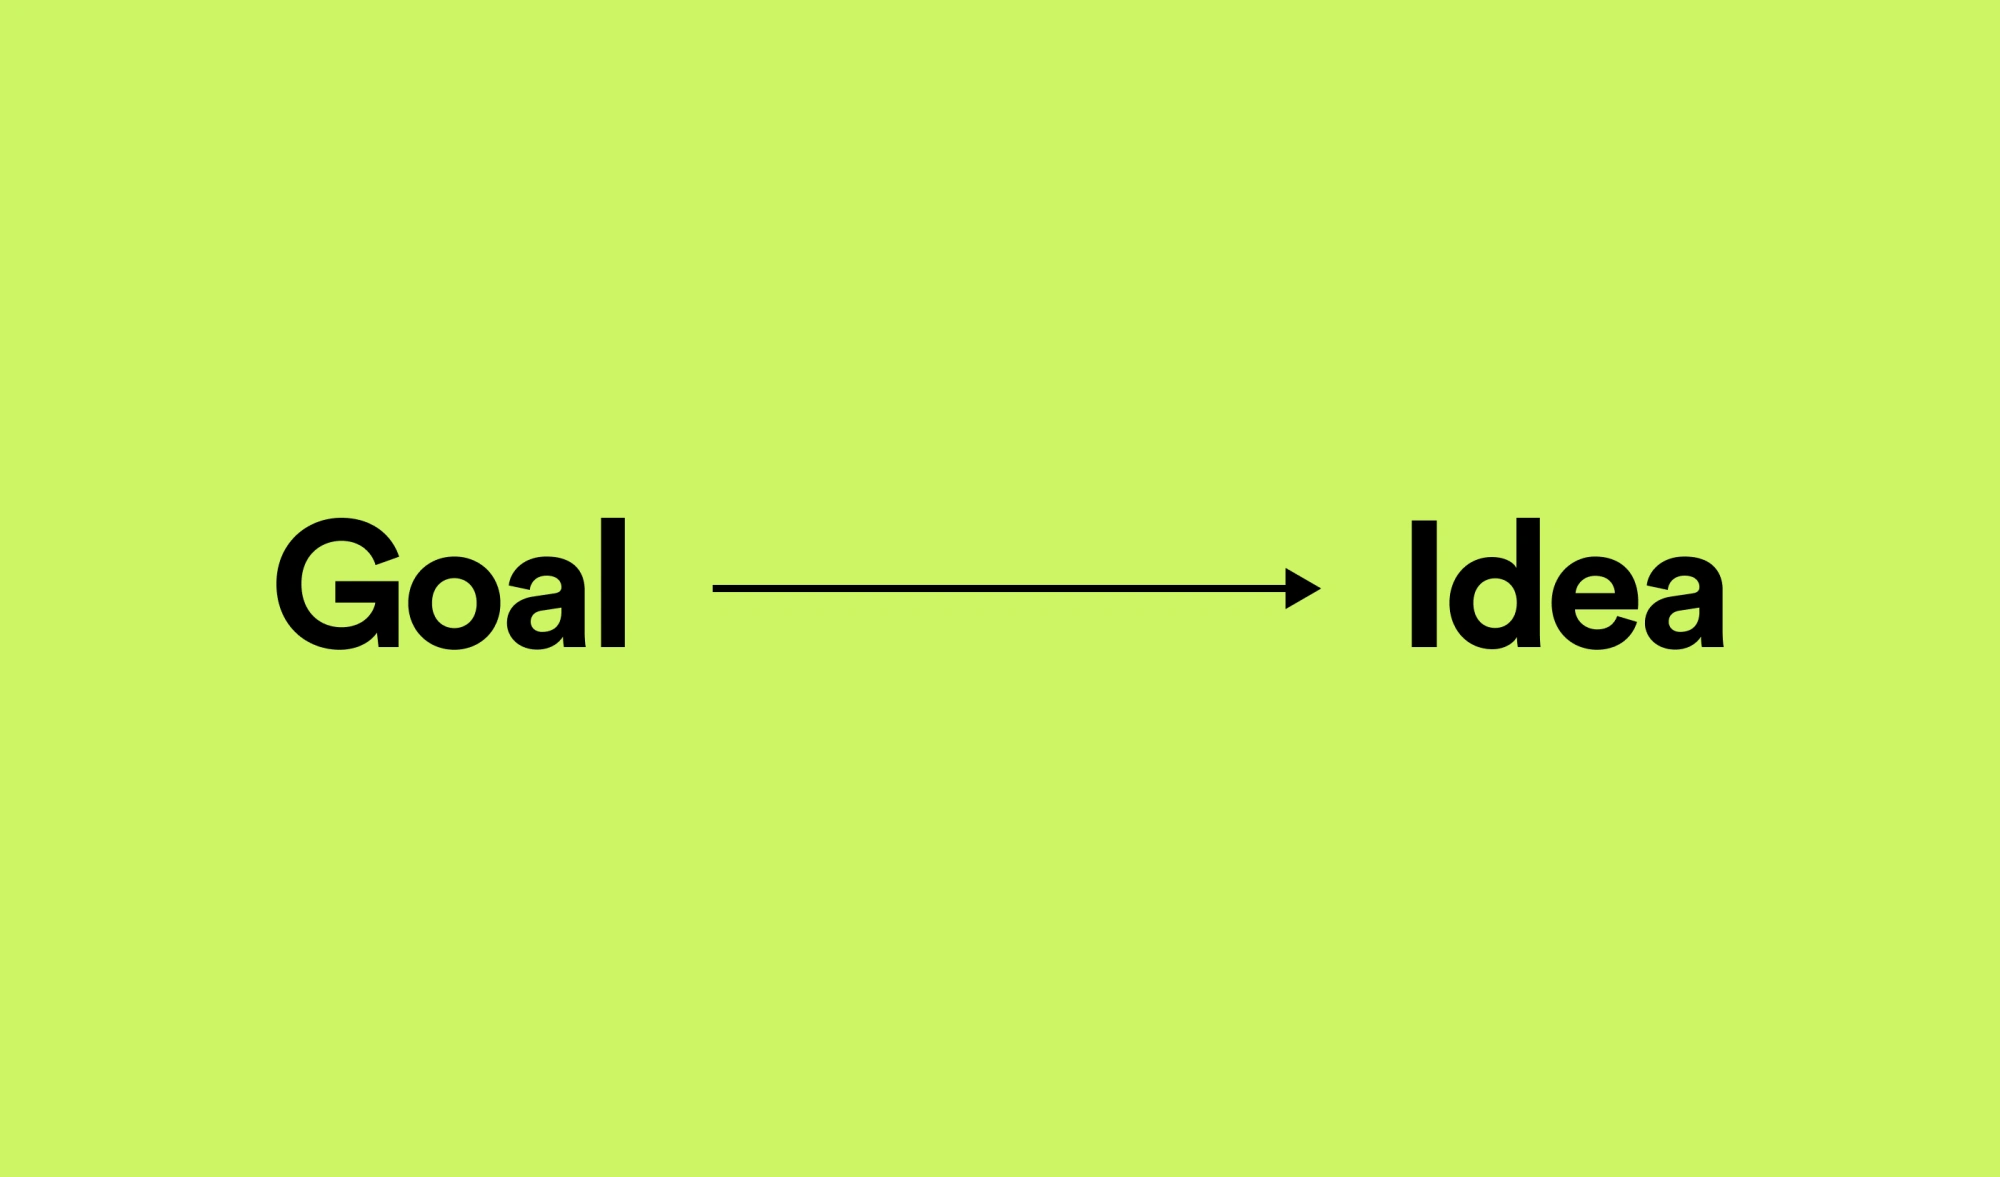 one goal, one idea